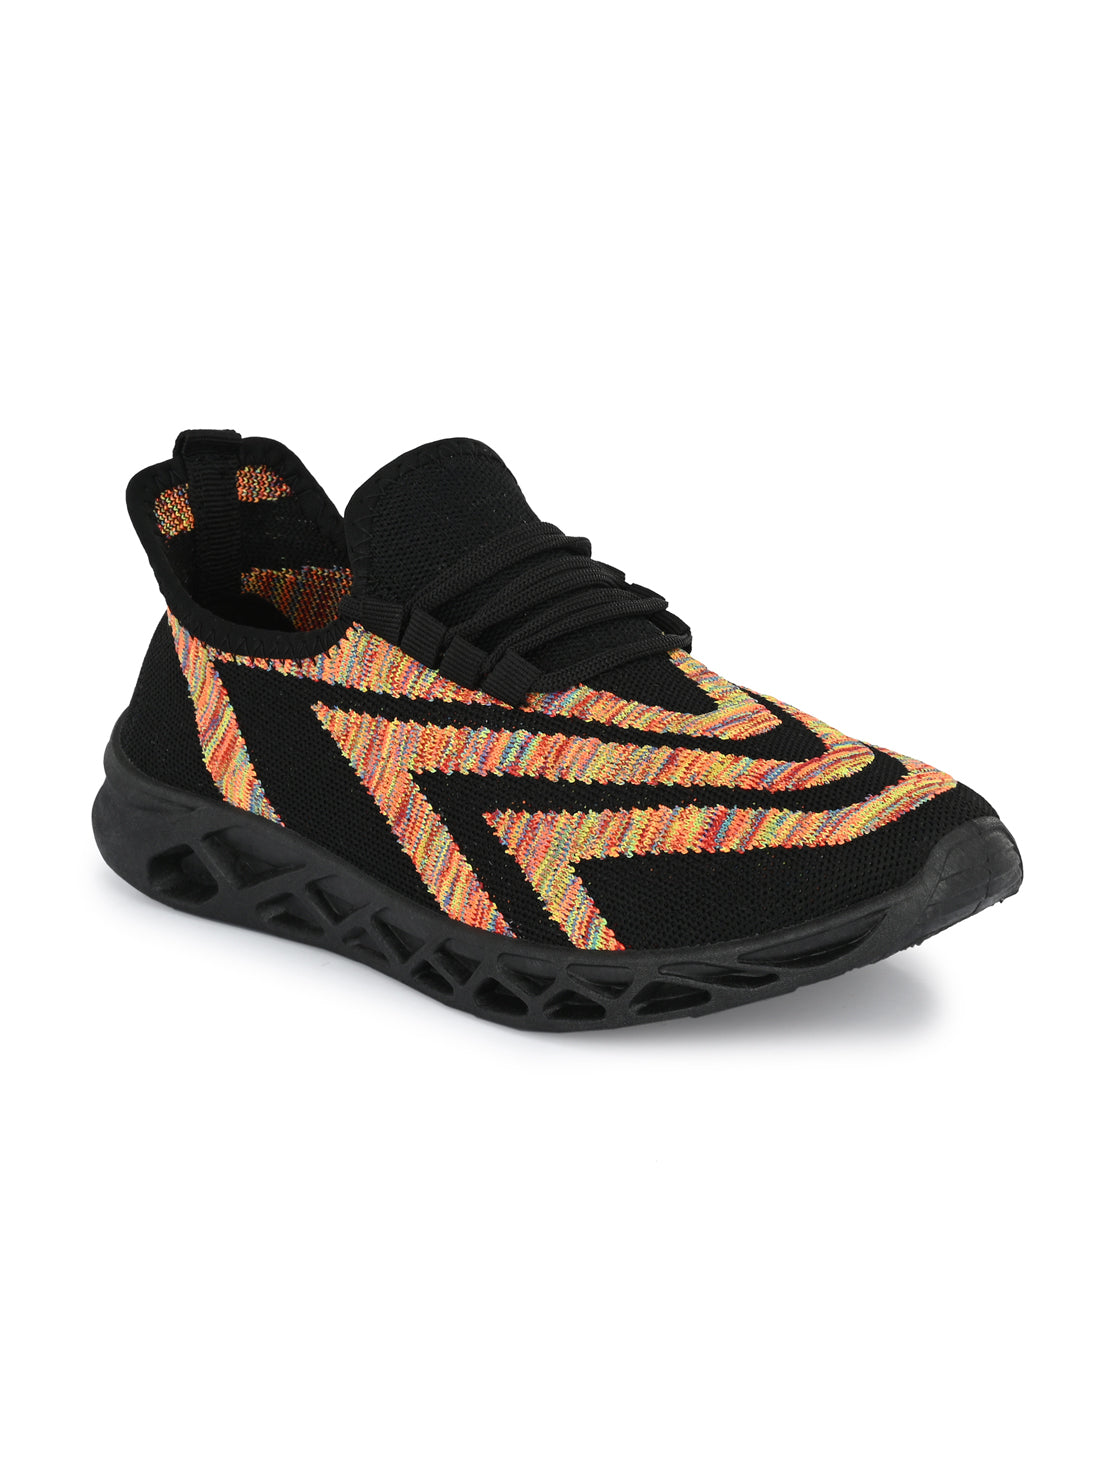 Hirolas® Men's Black Knitted Running/Walking/Gym Lace Up Sport Shoes (HRL2050BLK)